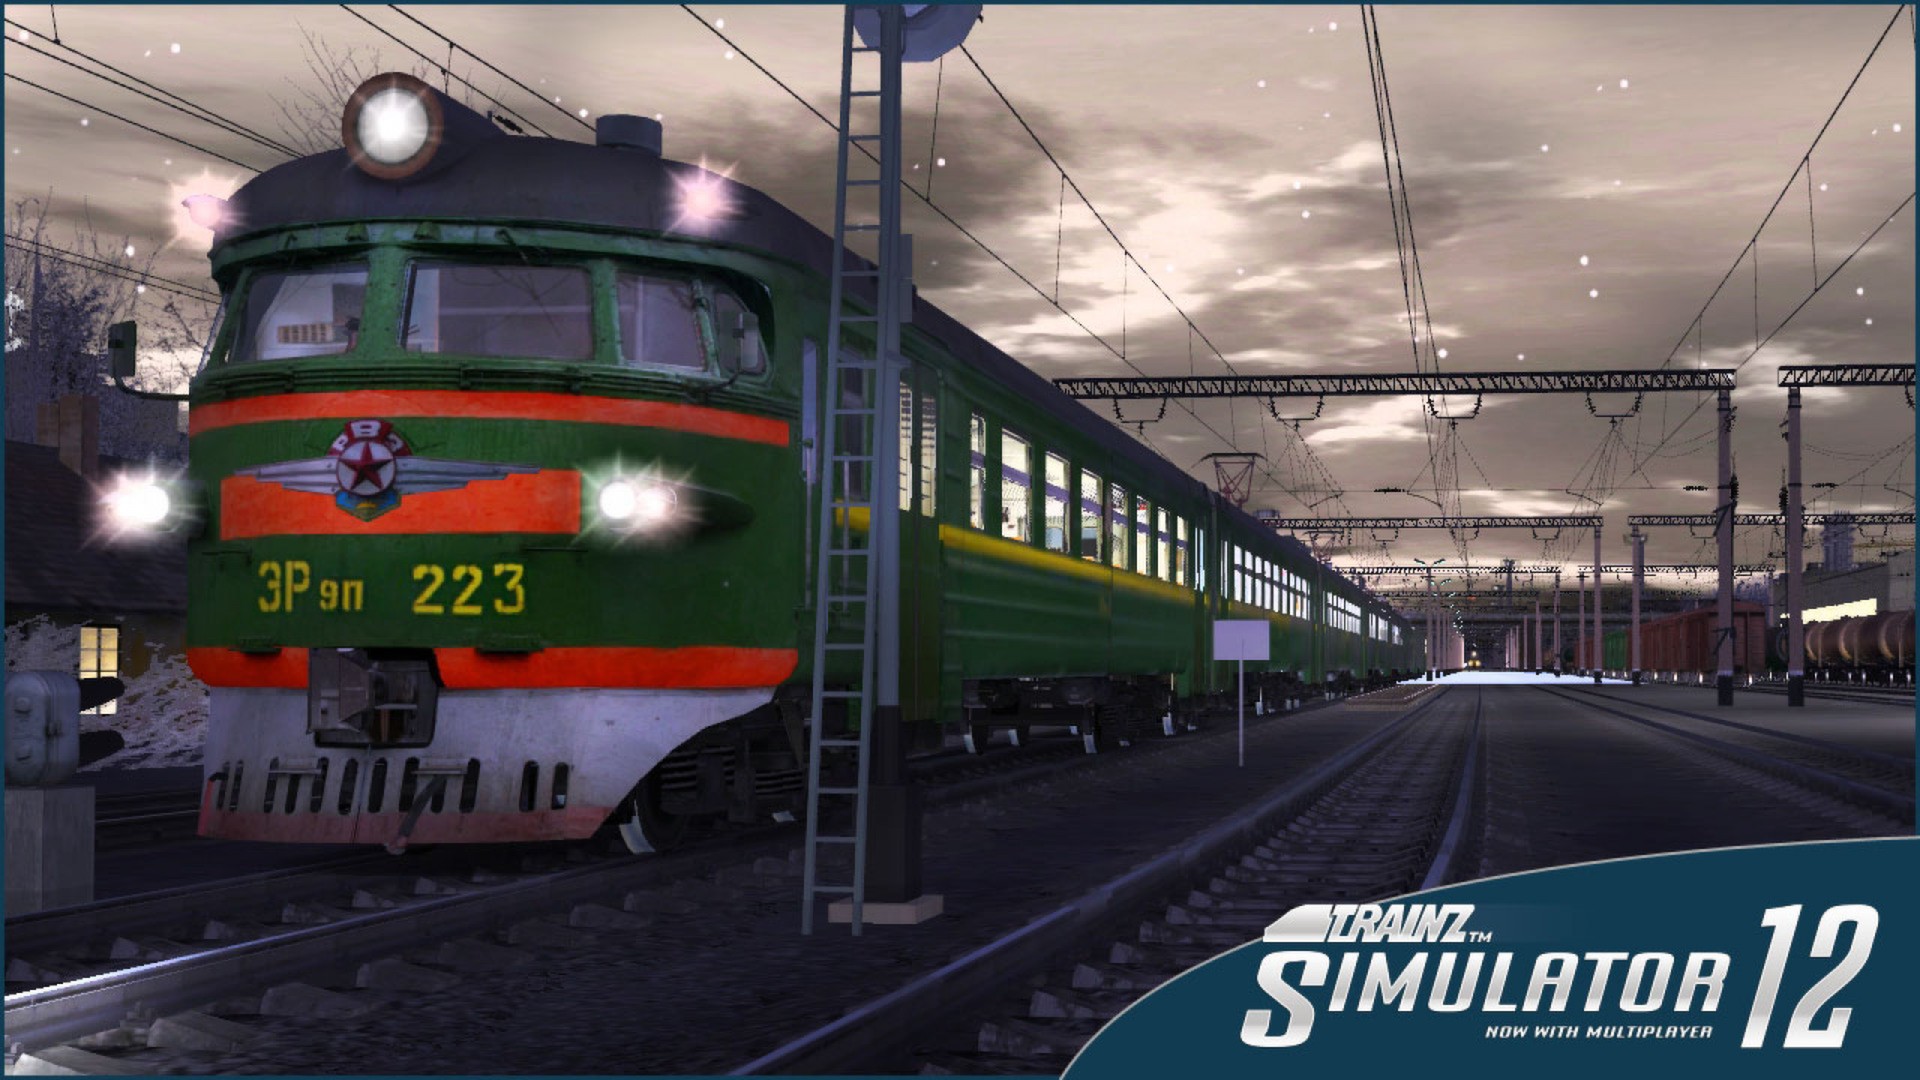 free download trainz simulator 2012